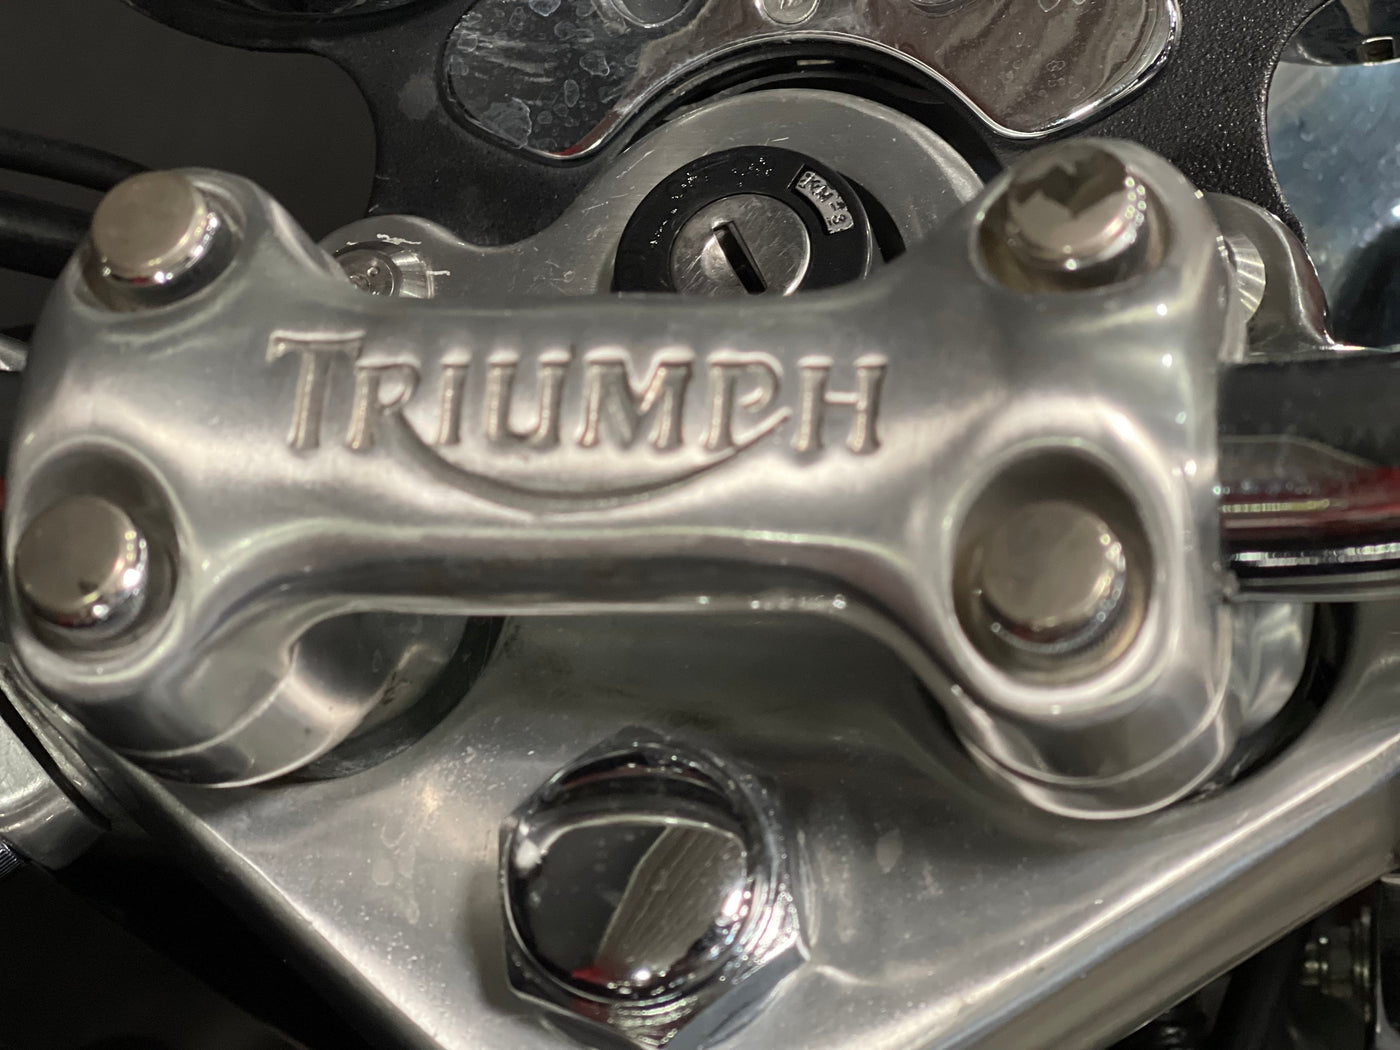 1996 Triumph Thunderbird